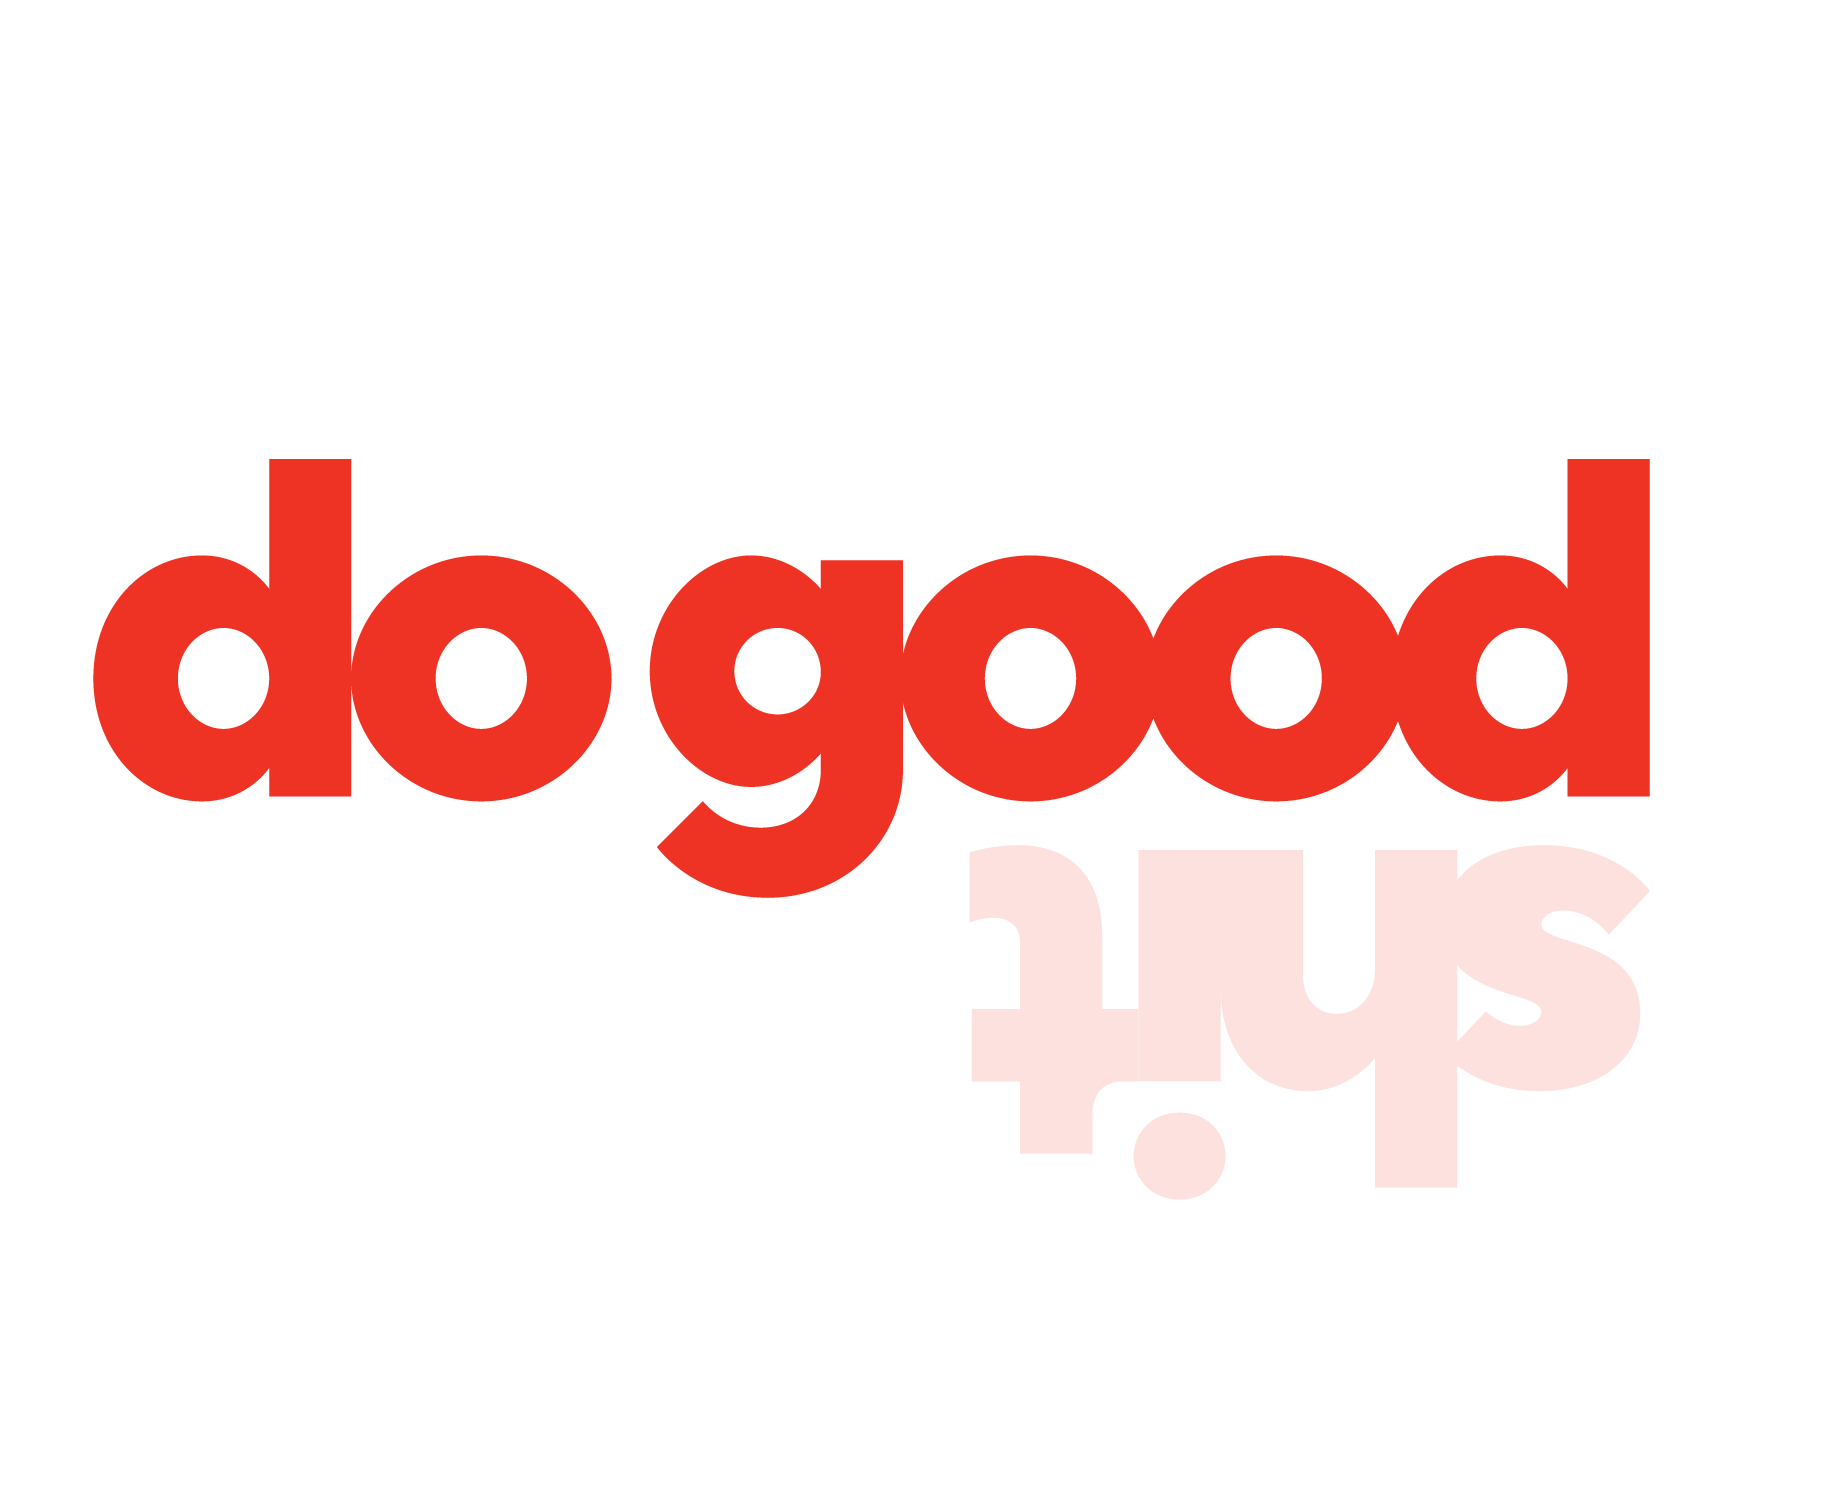 Do good stuff